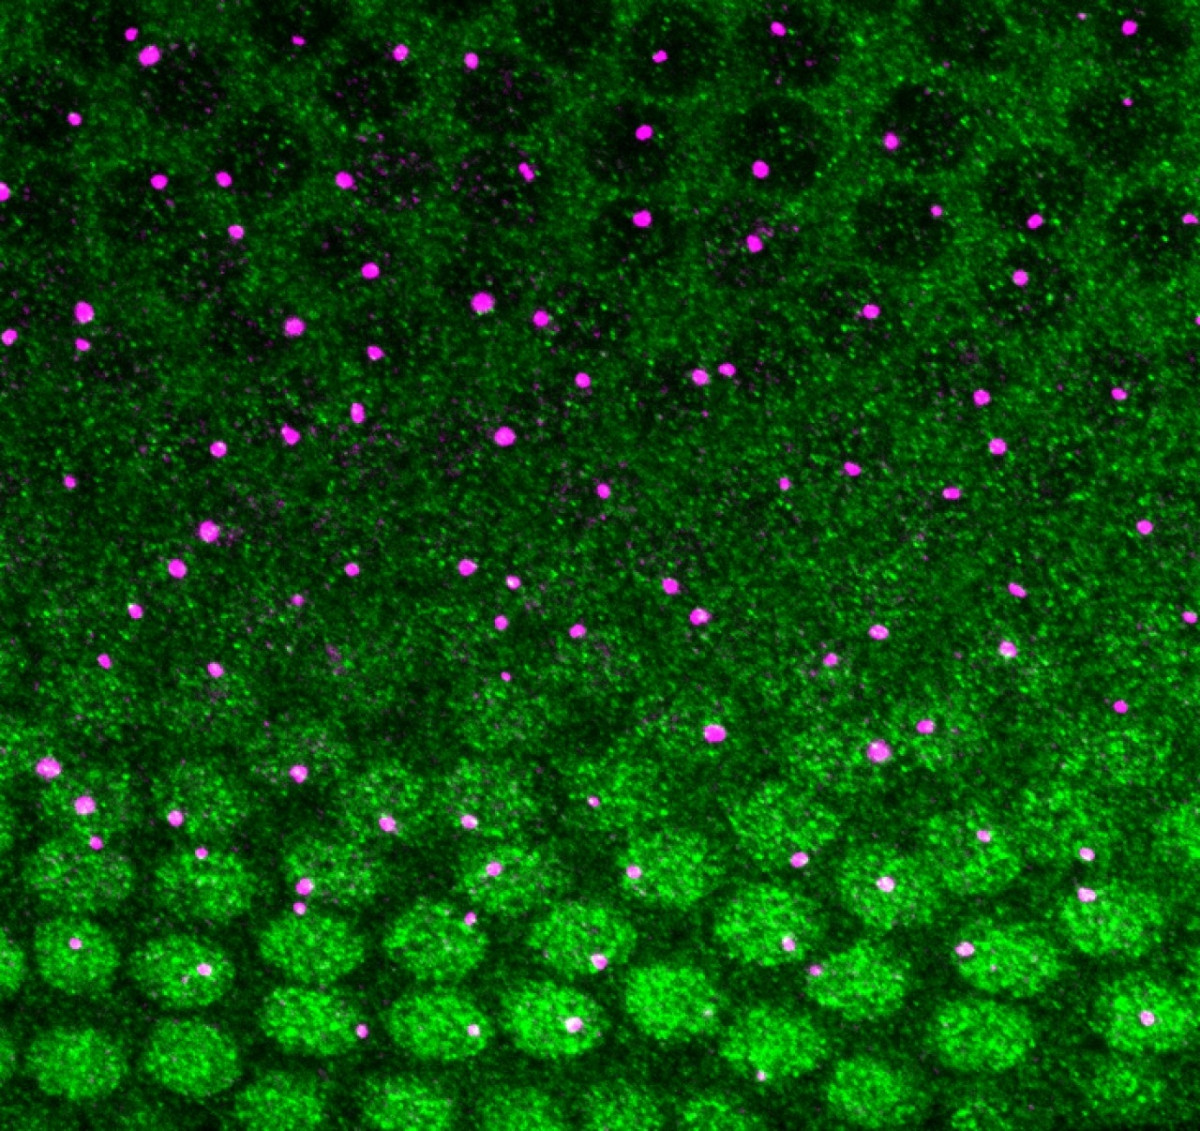 Dorsal protein gradient in Drosophila embryo